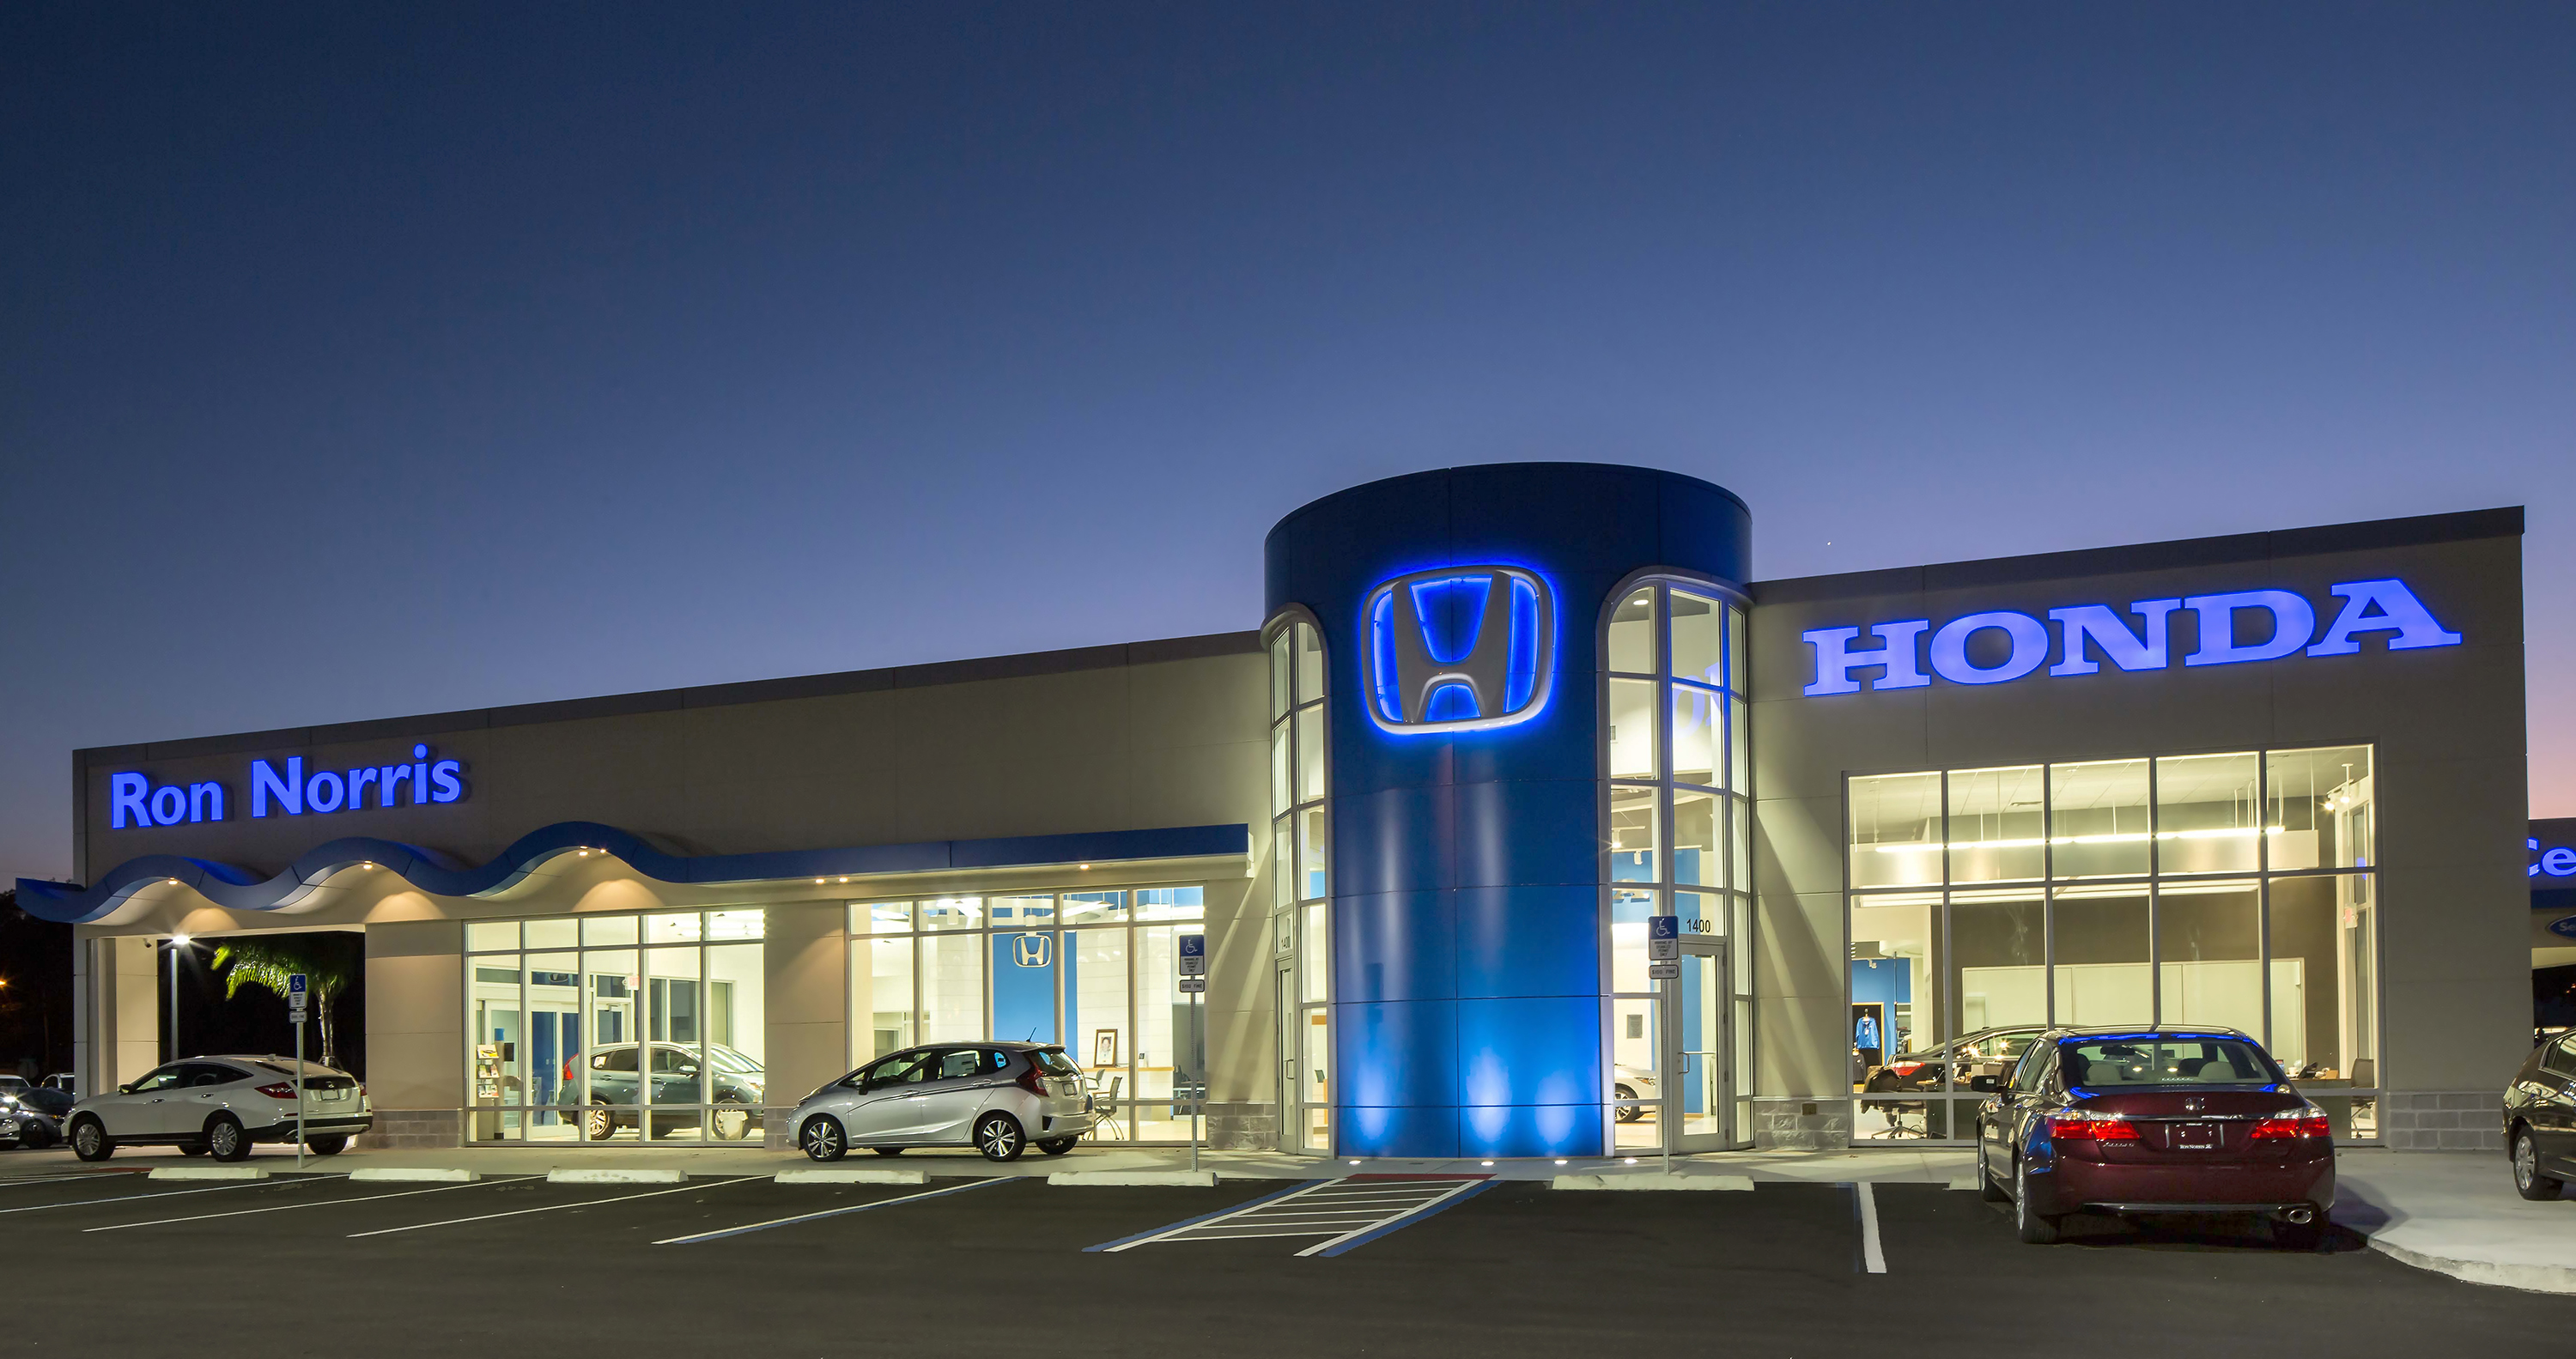 Ron Norris Honda Dealership – RUSH Construction, Inc.